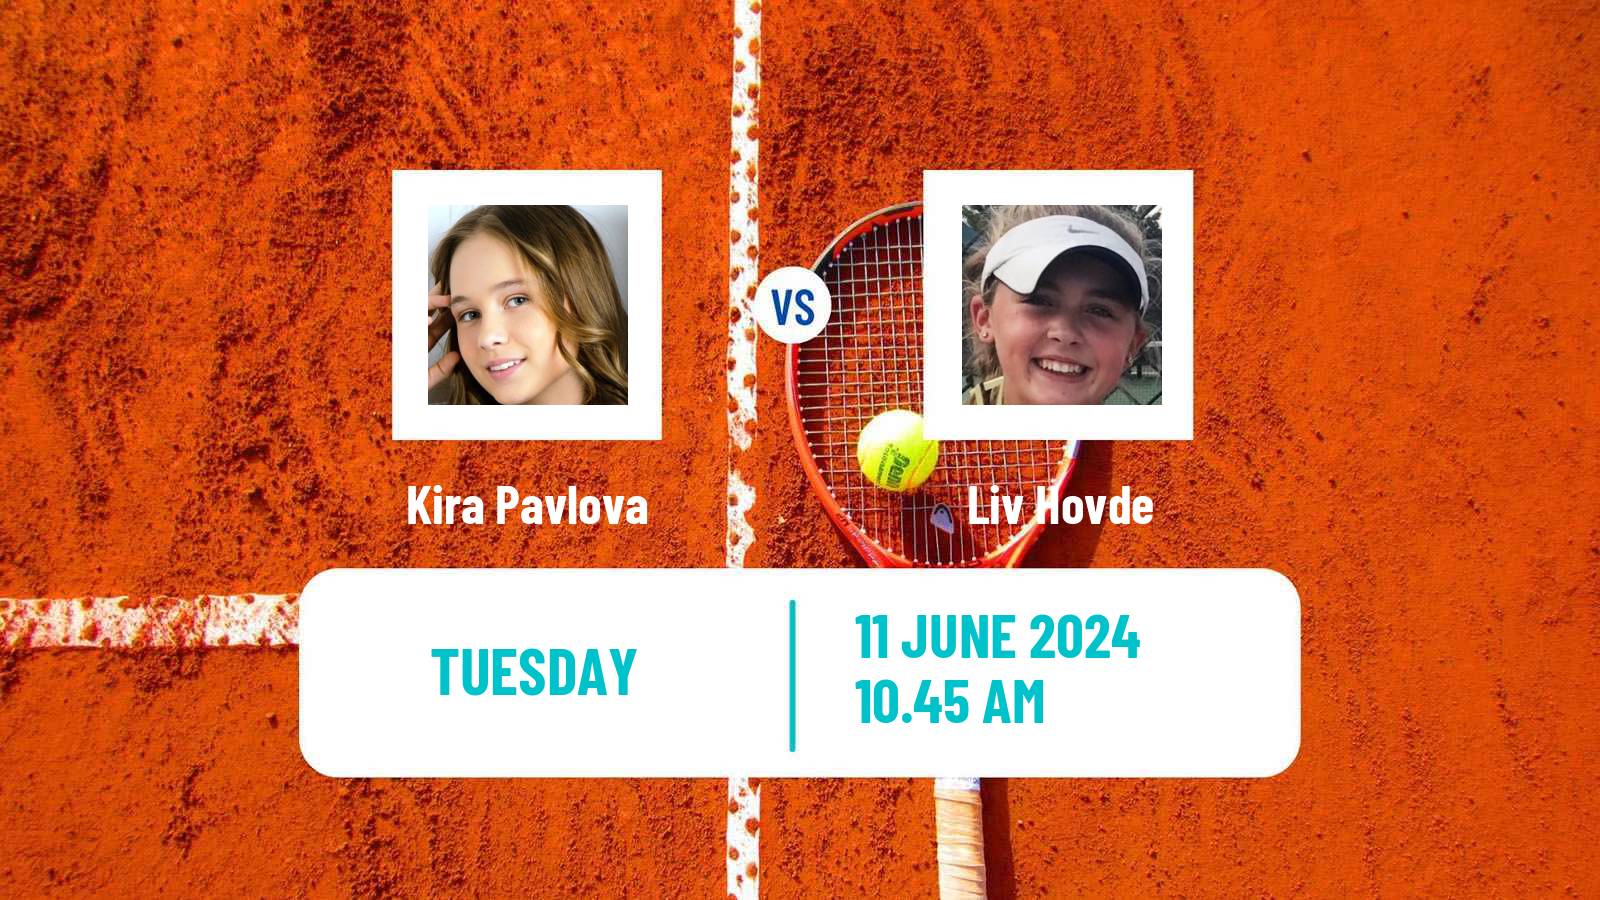 Tennis ITF W75 Guimaraes Women Kira Pavlova - Liv Hovde